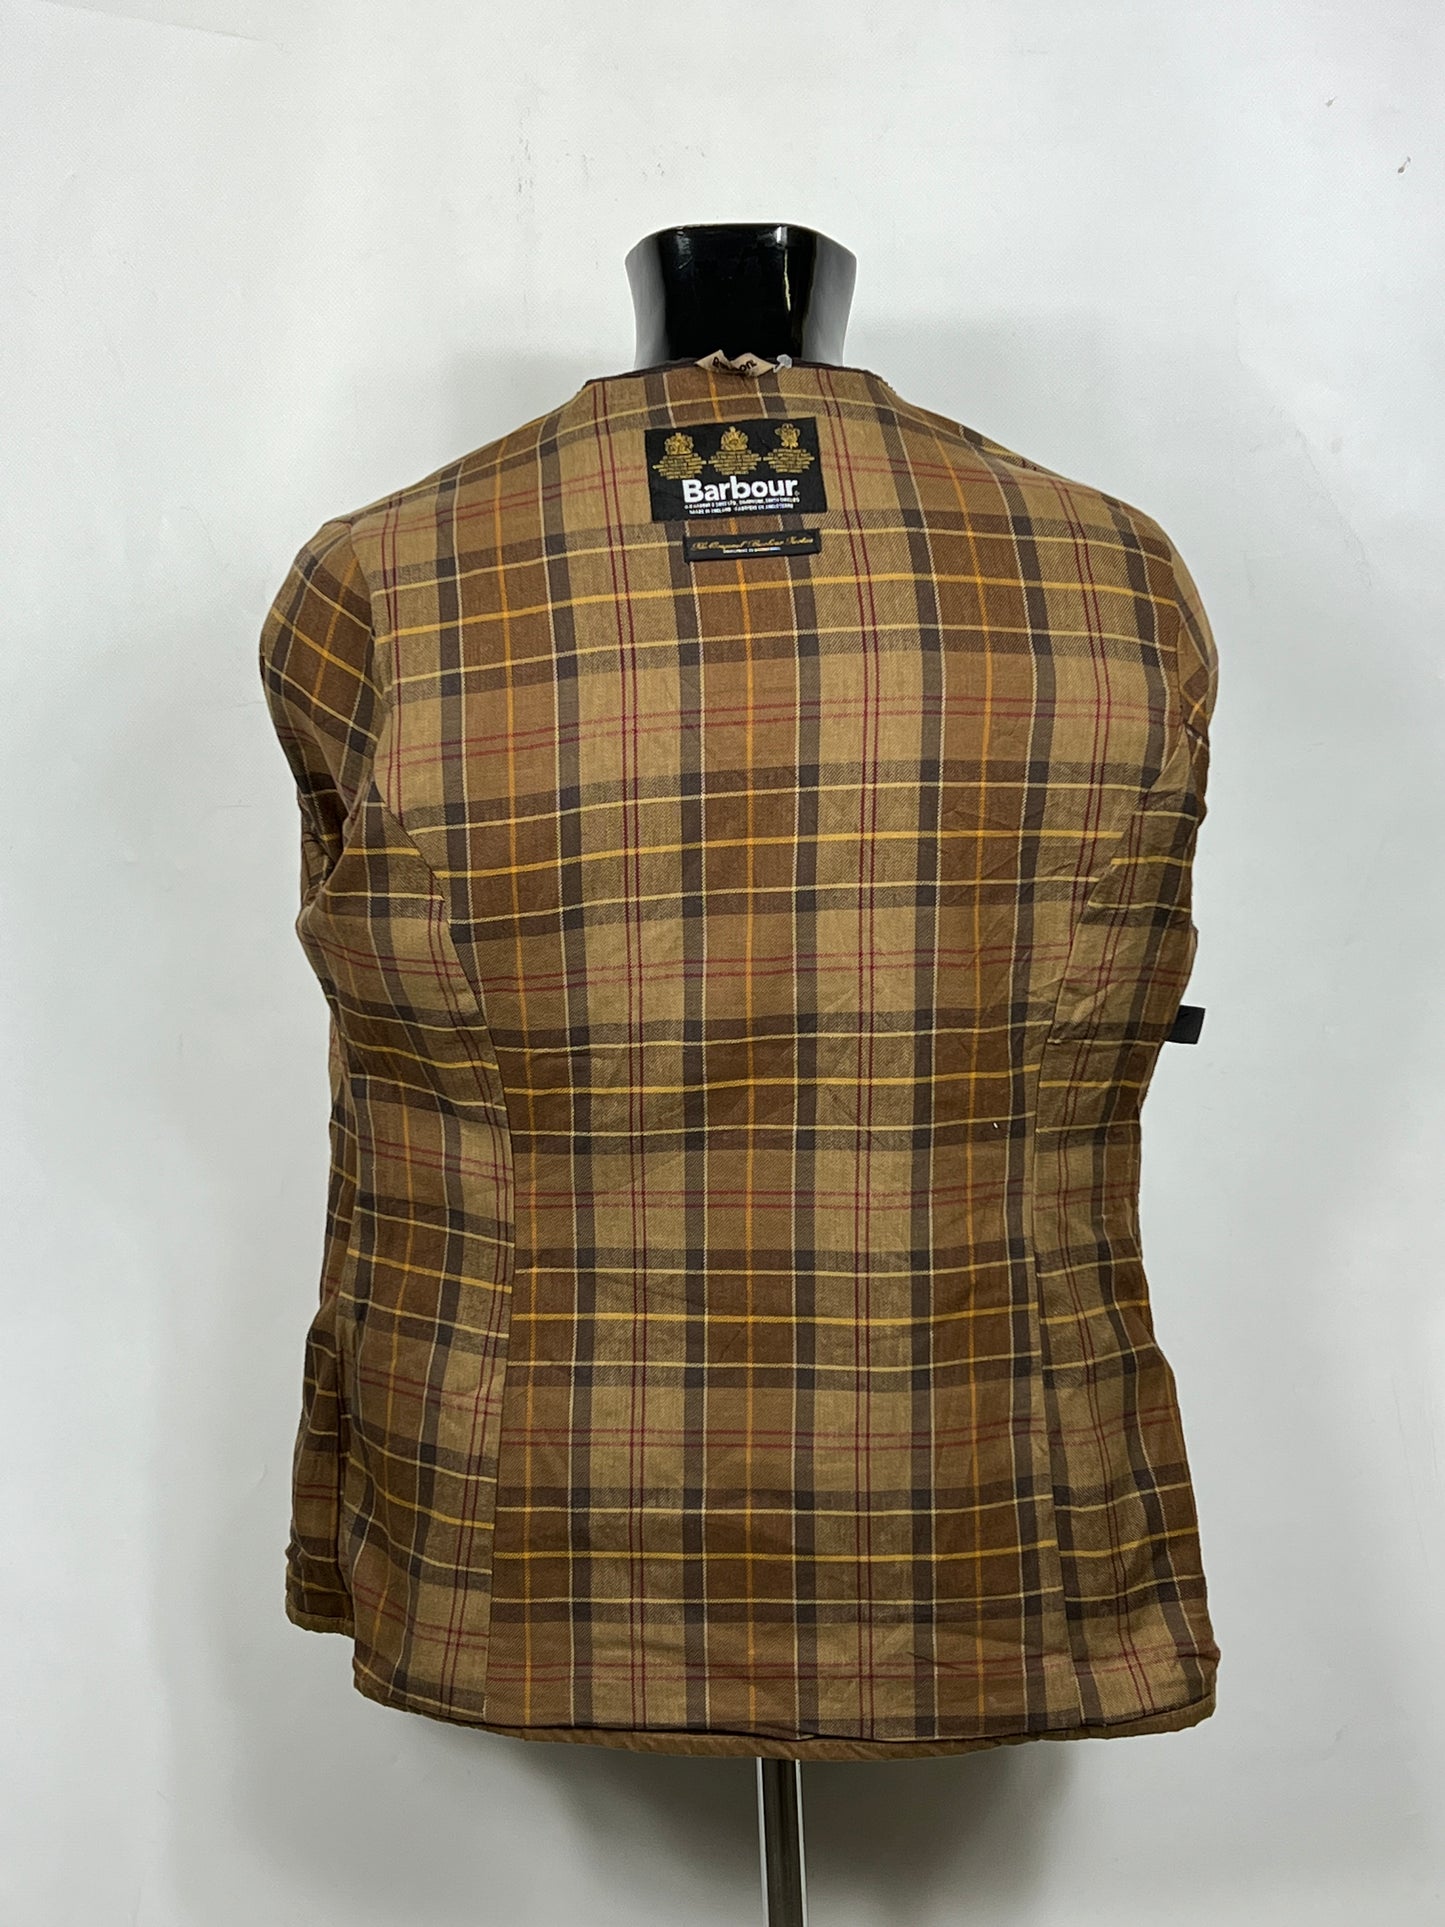 Giacca Barbour donna Beige corta UK14  Beige waxed lady jacket size Medium